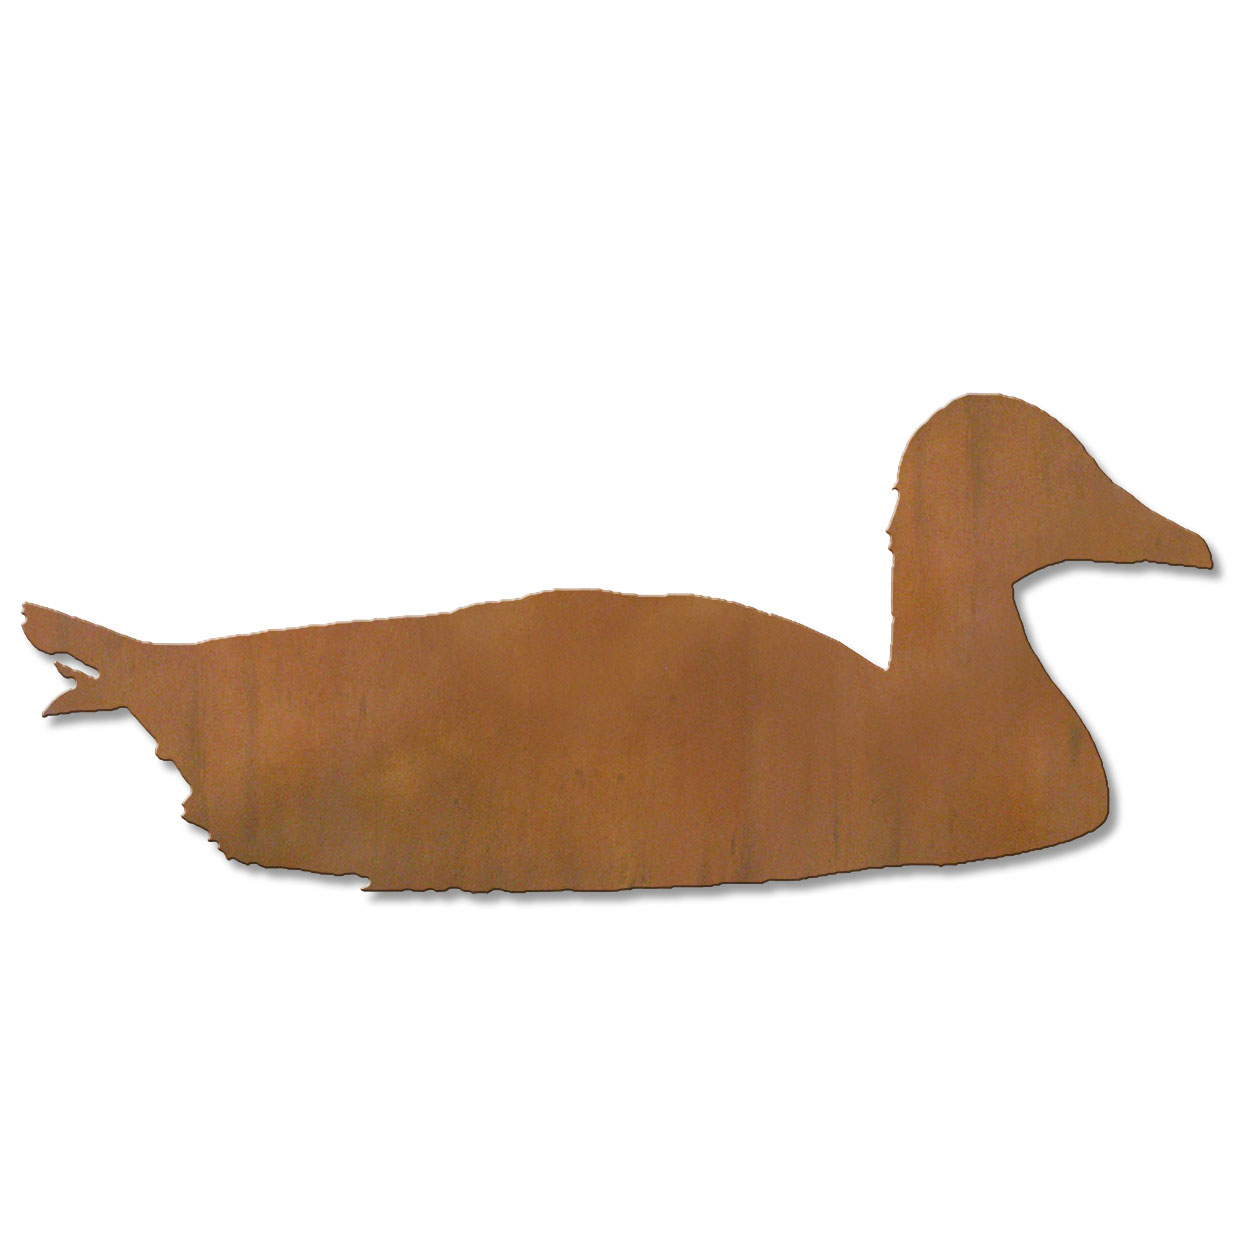 625471S - Floating Duck 12-inch Metal Wall Art